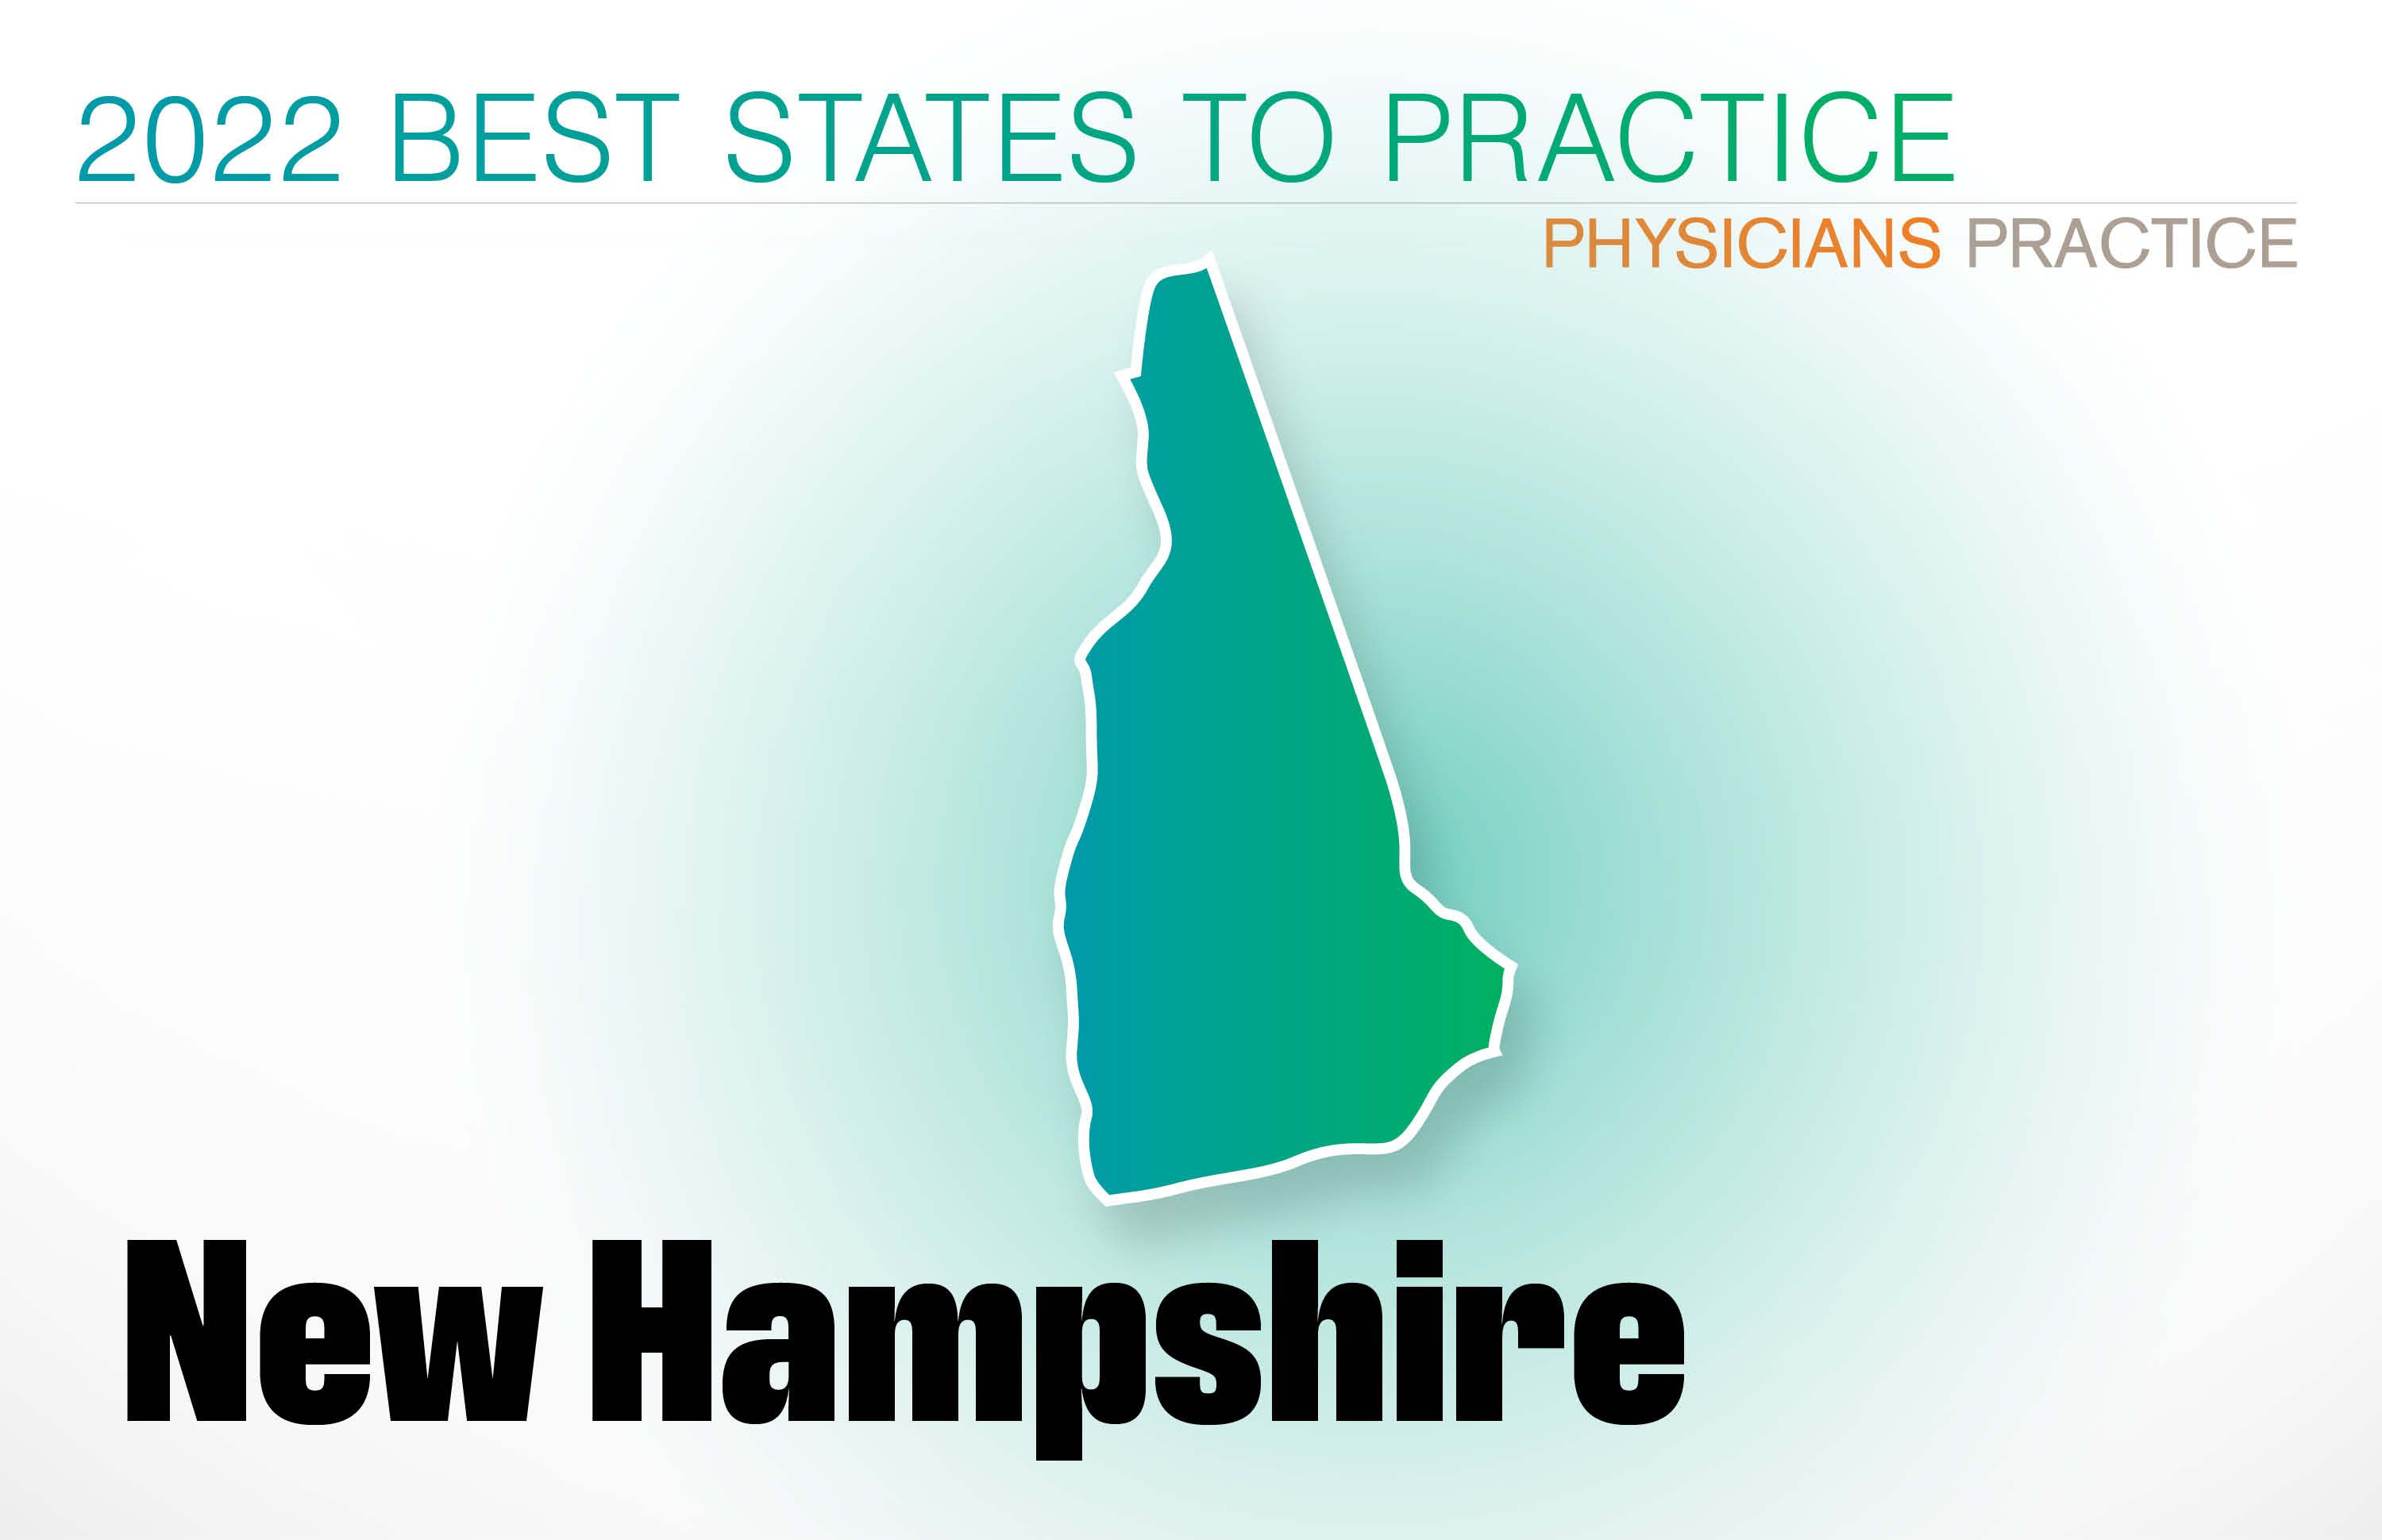 #6 New Hampshire